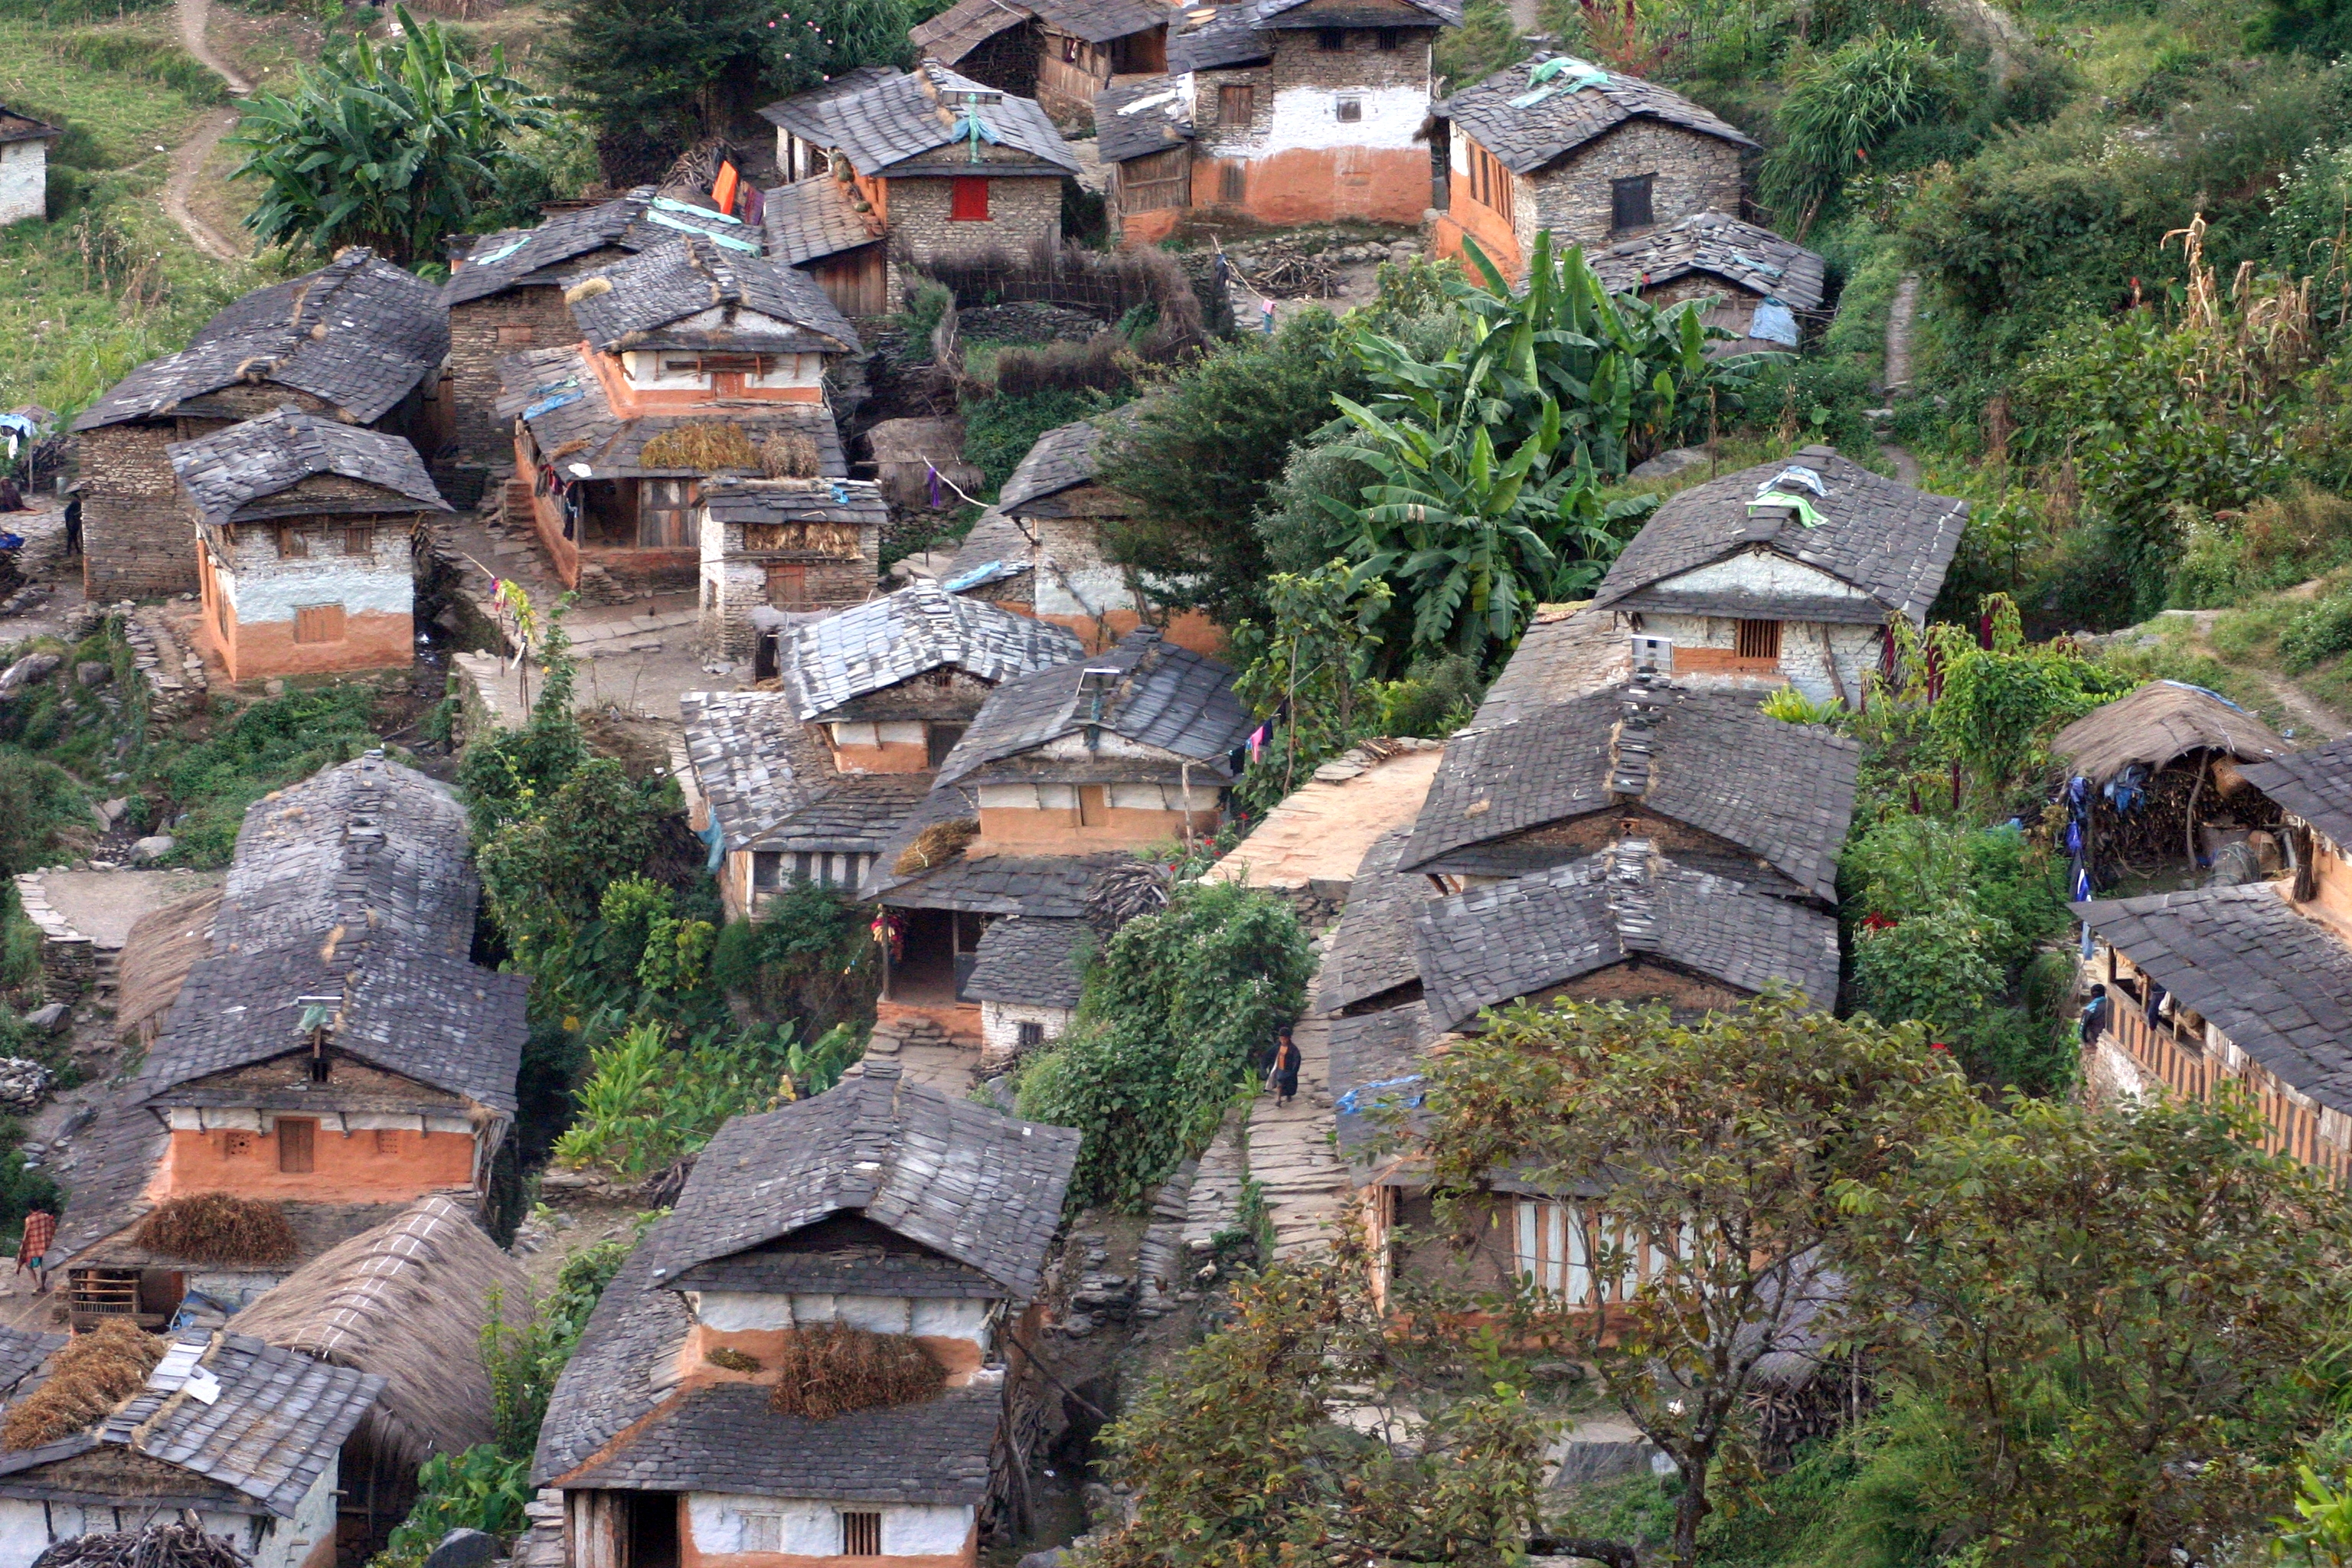 File:Flickr - don macauley - Village in Nepal.jpg - Wikimedia Commons